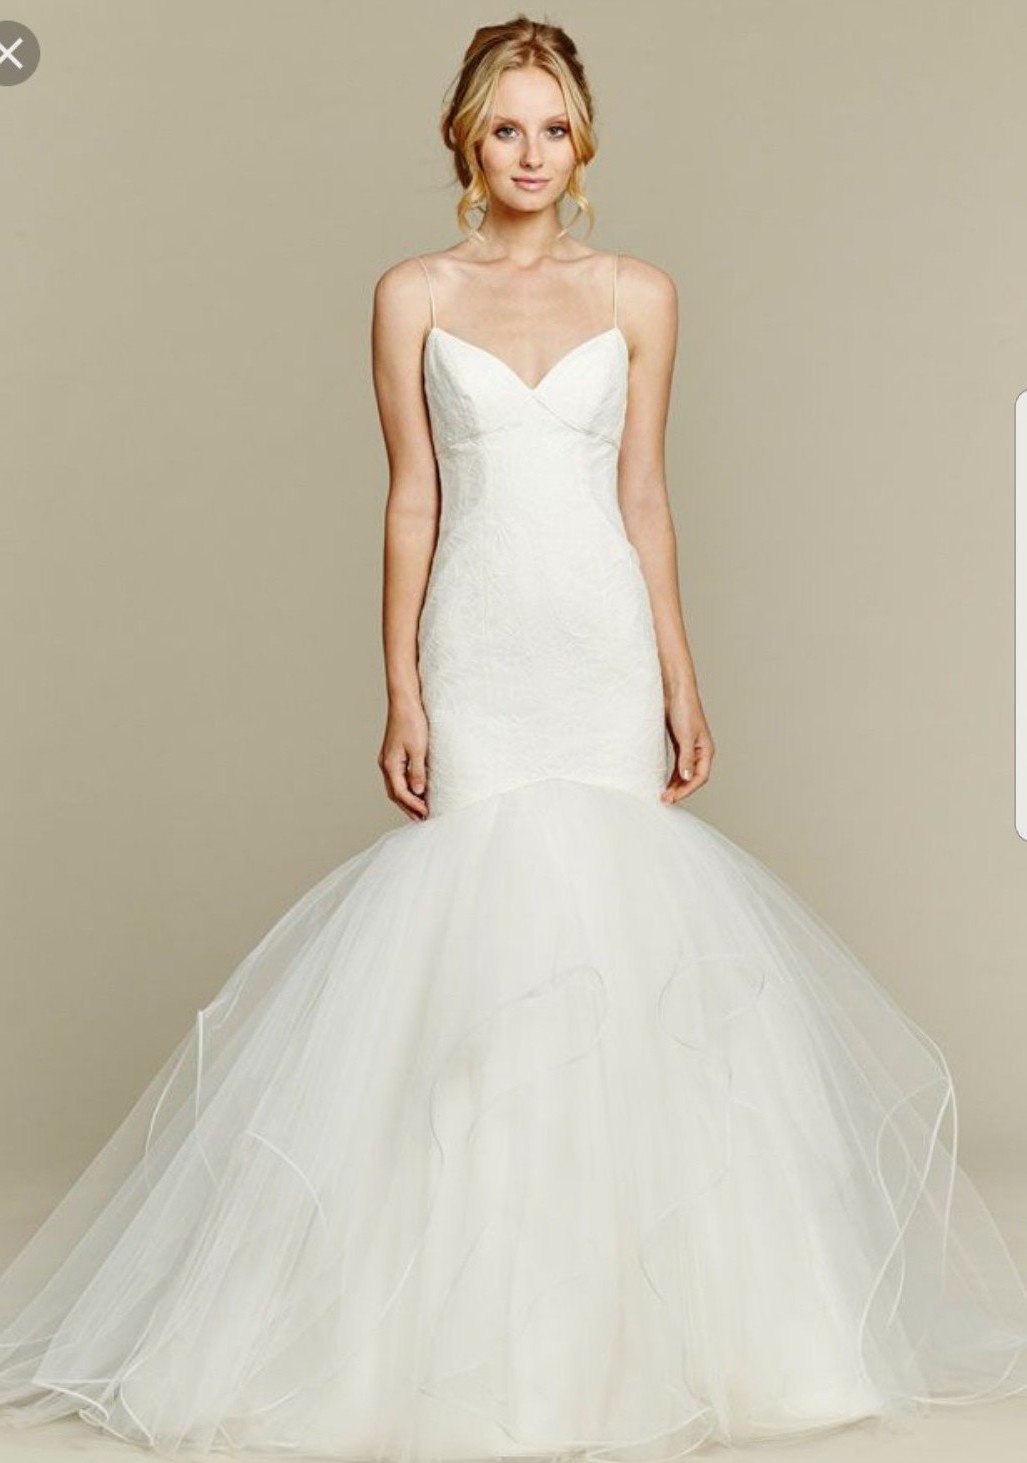  Hayley  Paige  Blush  Sample Wedding  Dress  on Sale 61 Off 